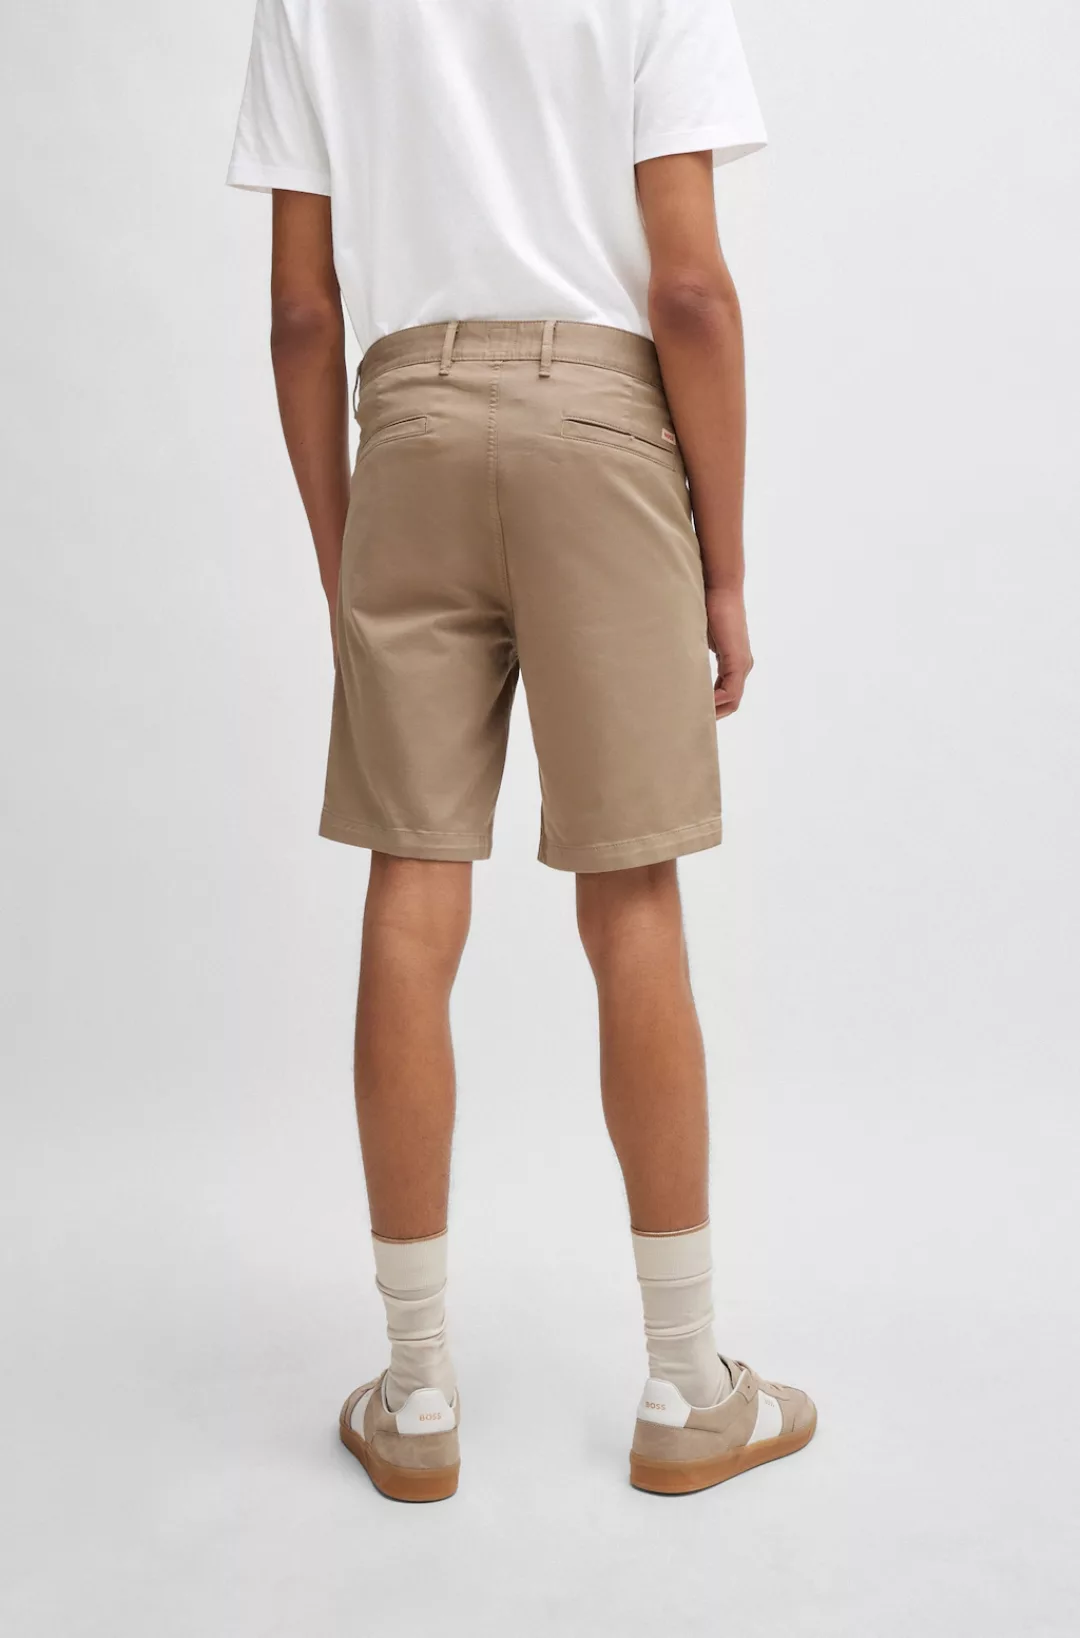 BOSS ORANGE Stoffhose Chino-slim-Shorts 10248647 01, Light/Pastel Blue günstig online kaufen